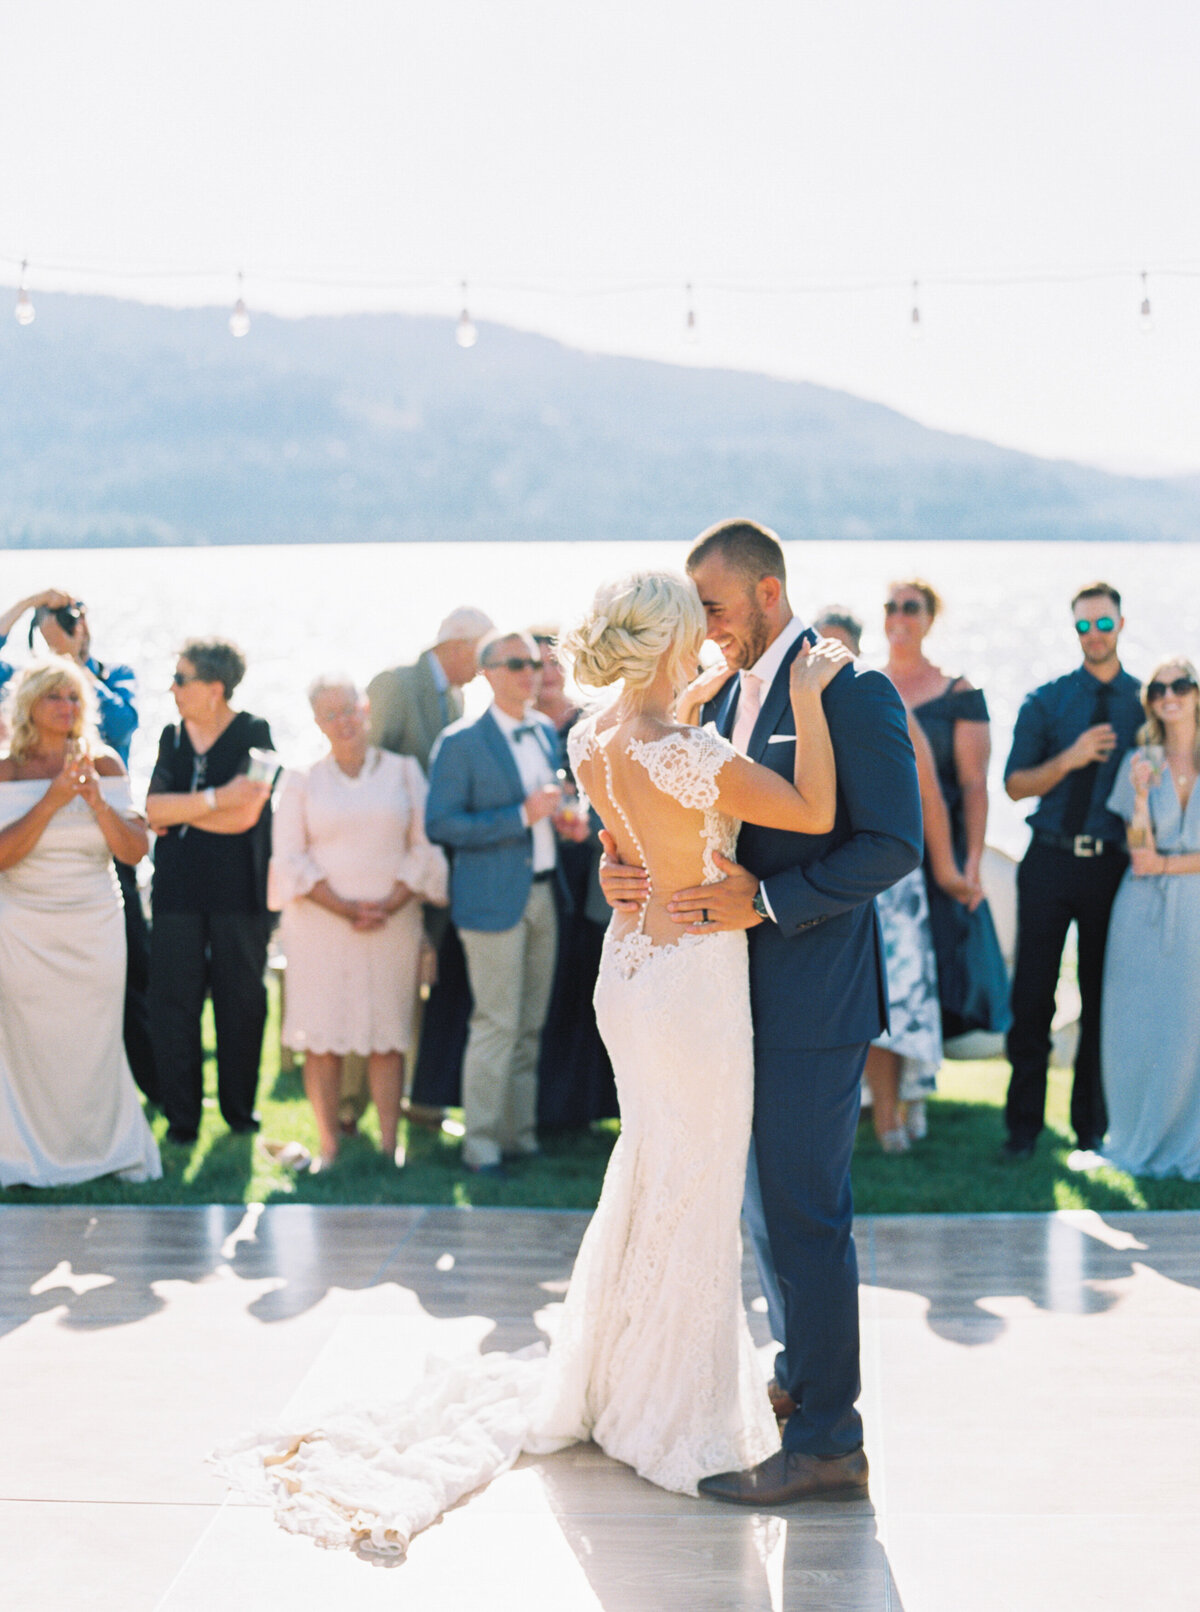 Mimi & Zach | Whitefish, Montana | Mary Claire Photography | Arizona & Destination Fine Art Wedding Photographer